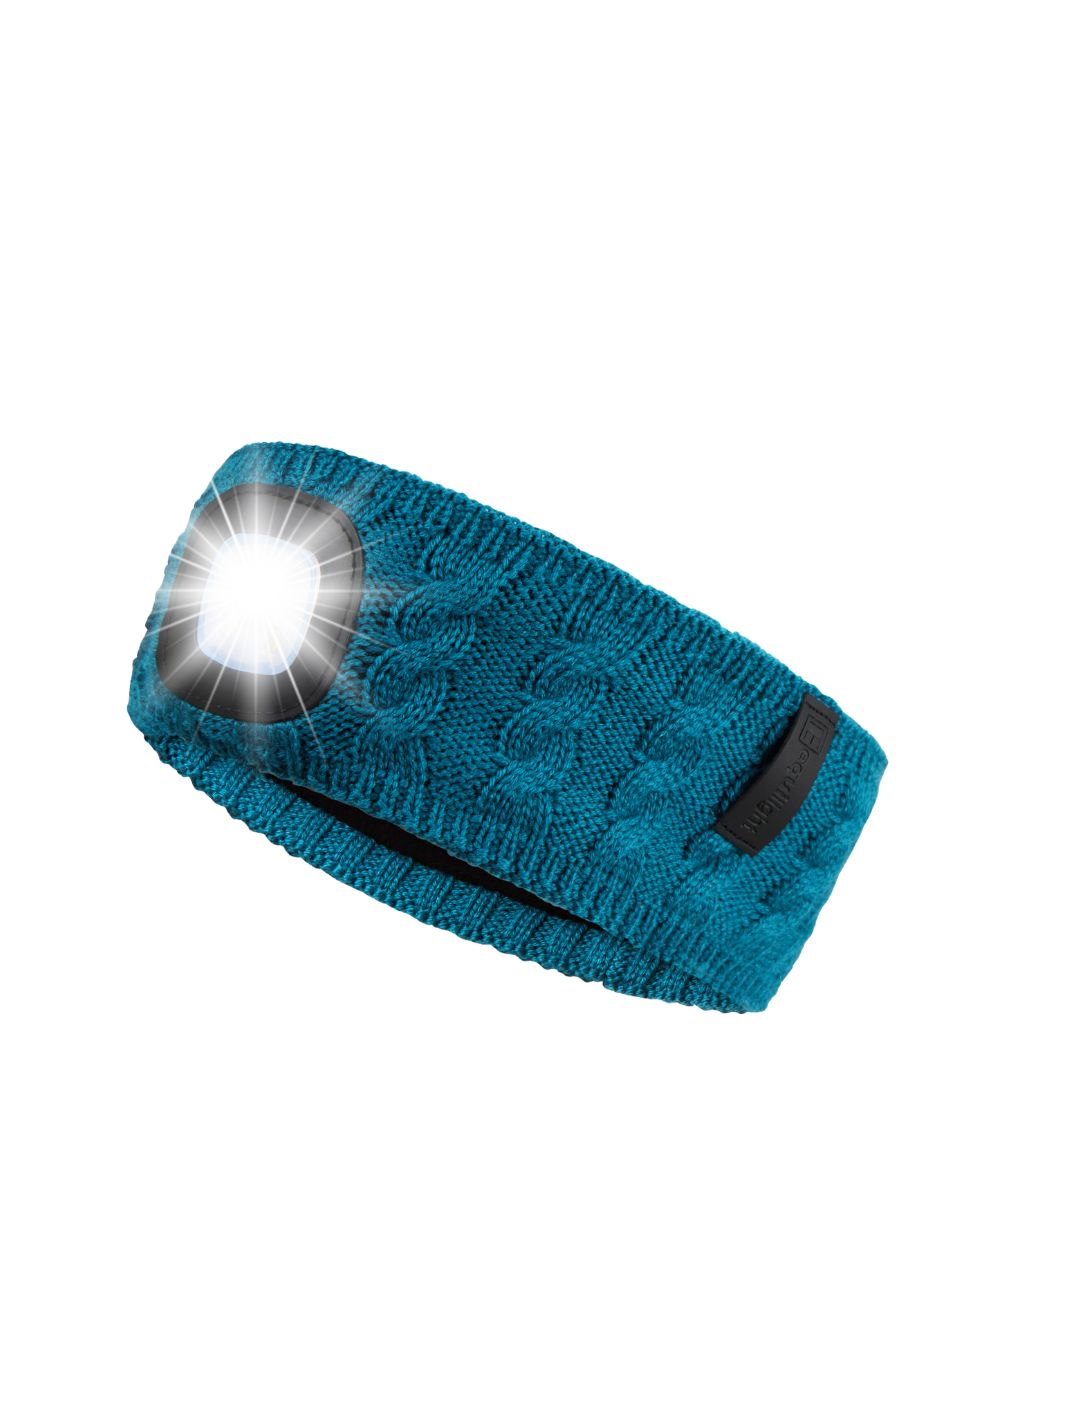 Illuminate Every Adventure With The Classic LED Headband ®